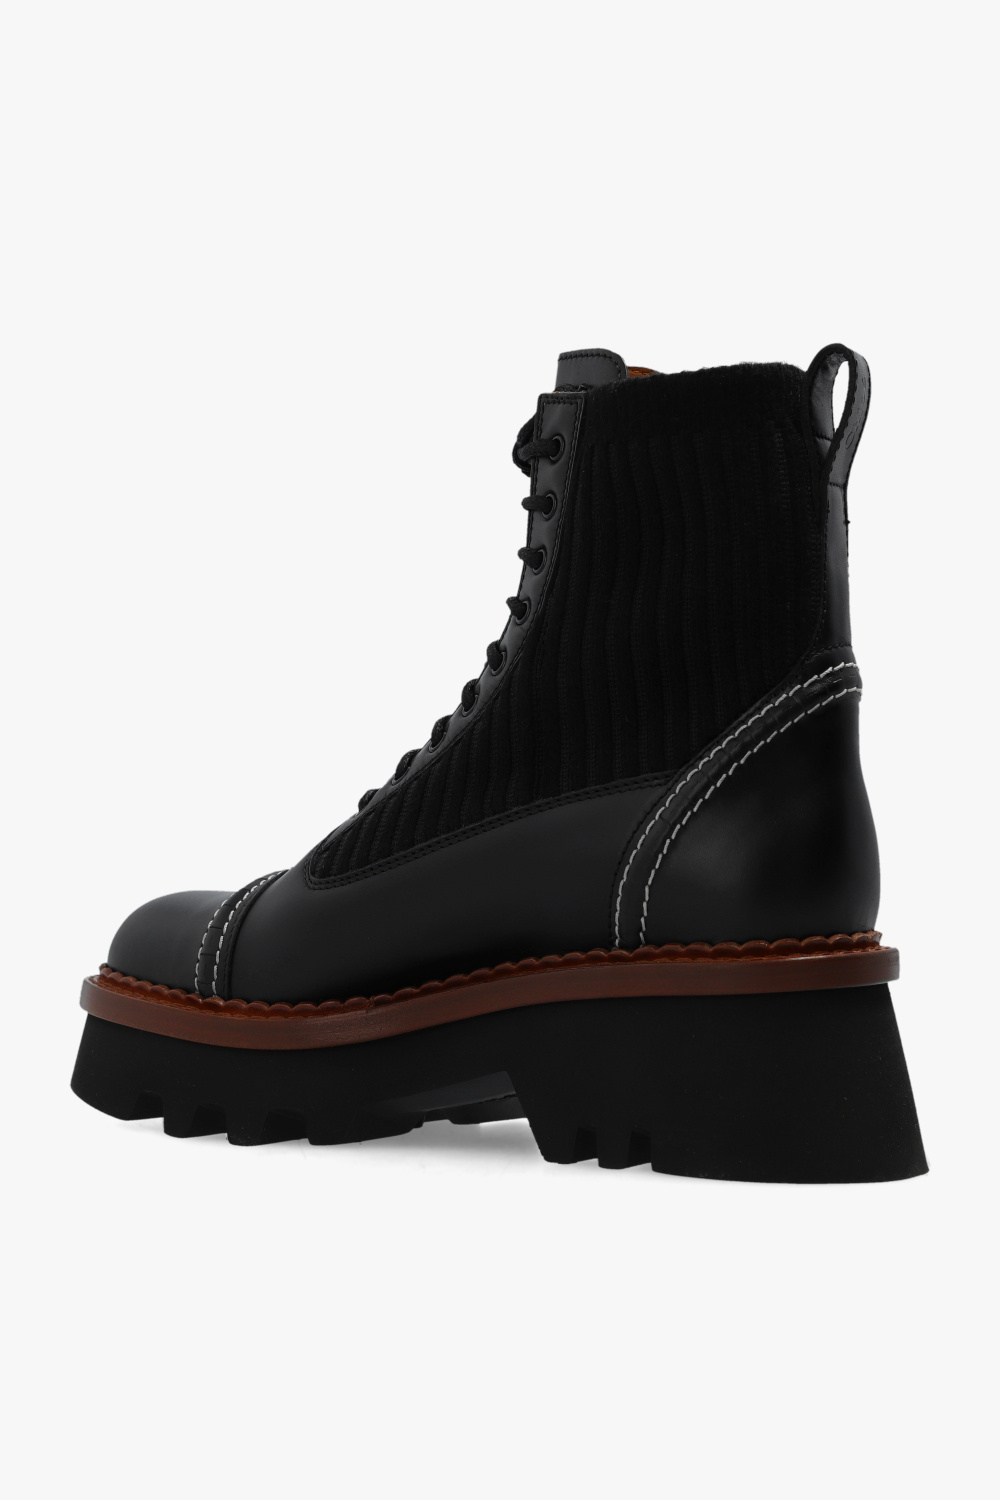 Chloé ‘Owena’ boots